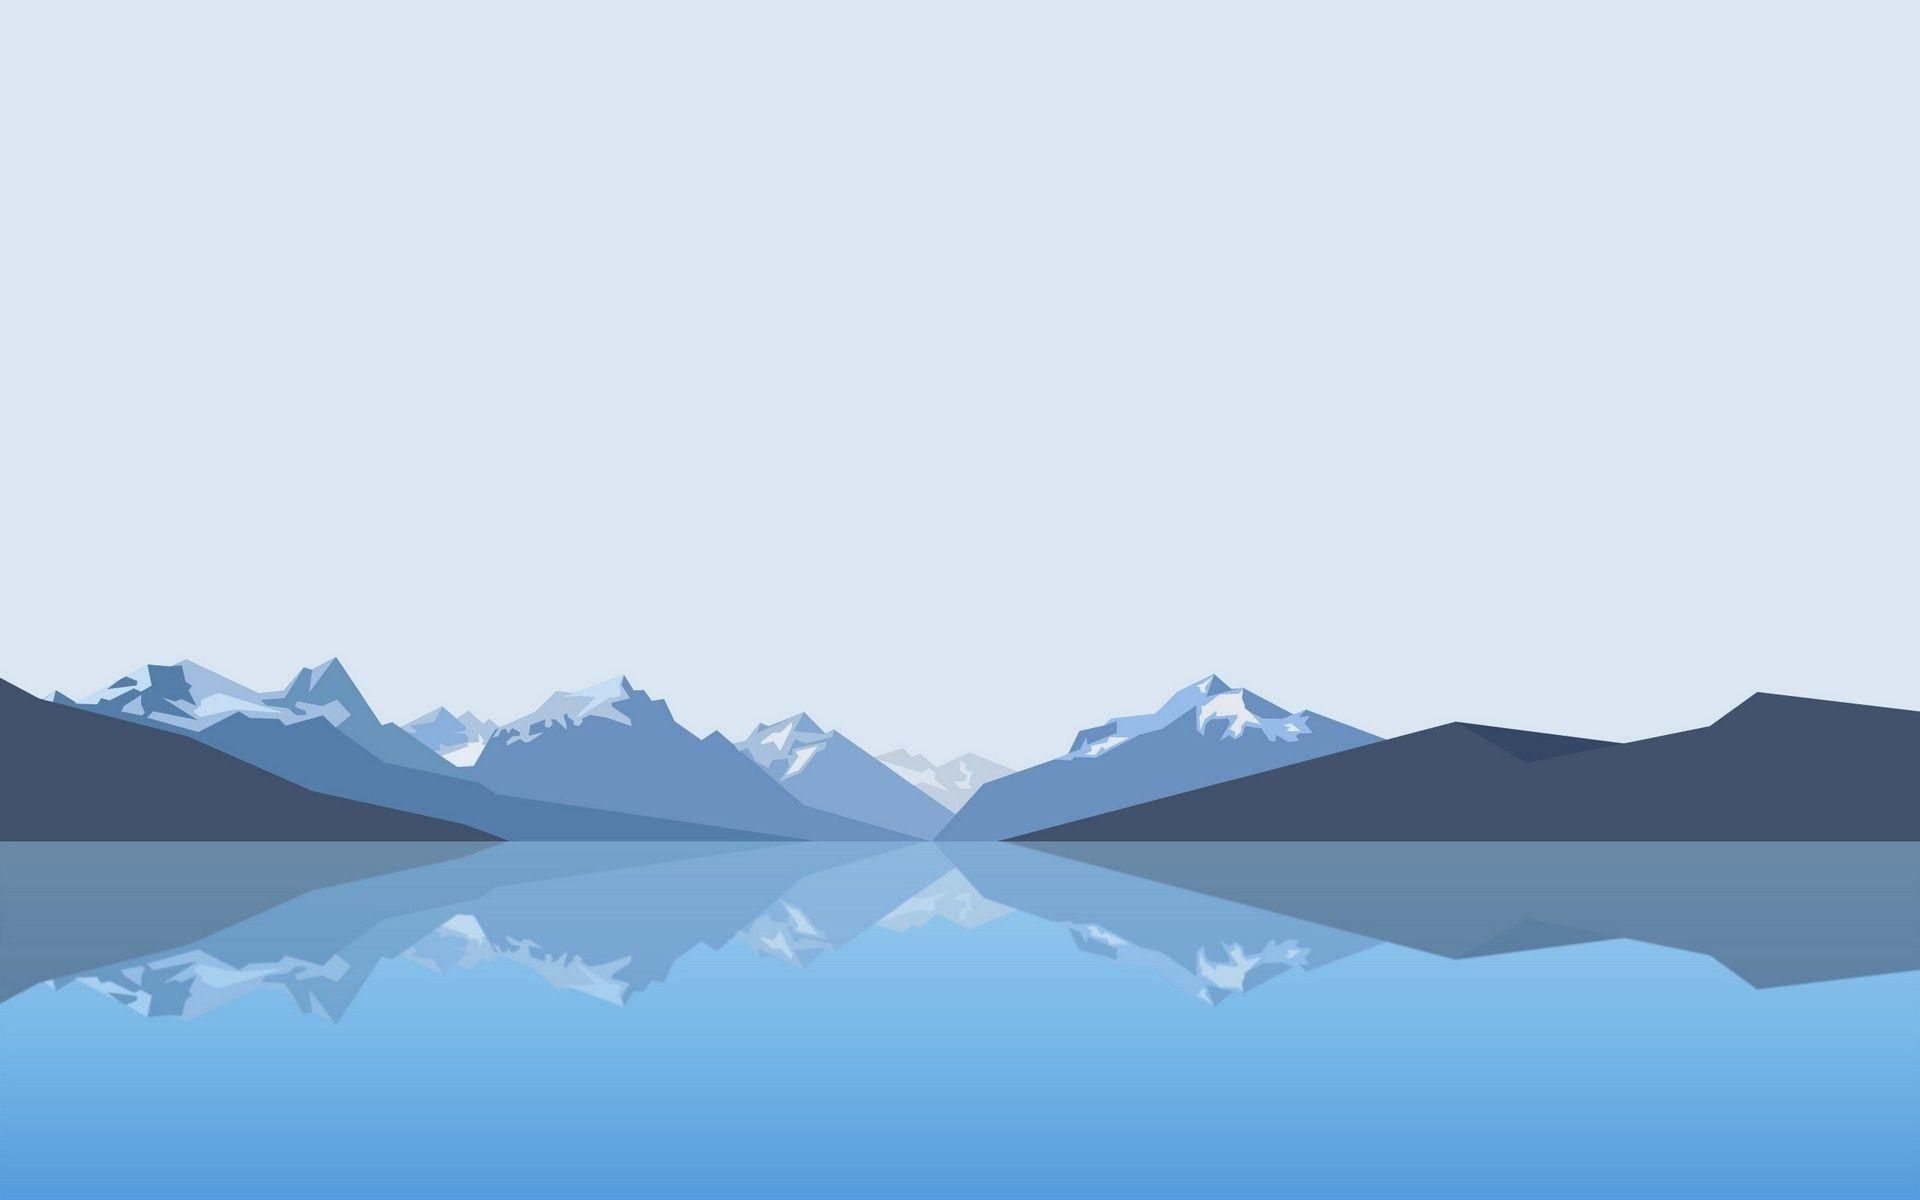 Minimalist Water Wallpapers - Top Free Minimalist Water Backgrounds ...